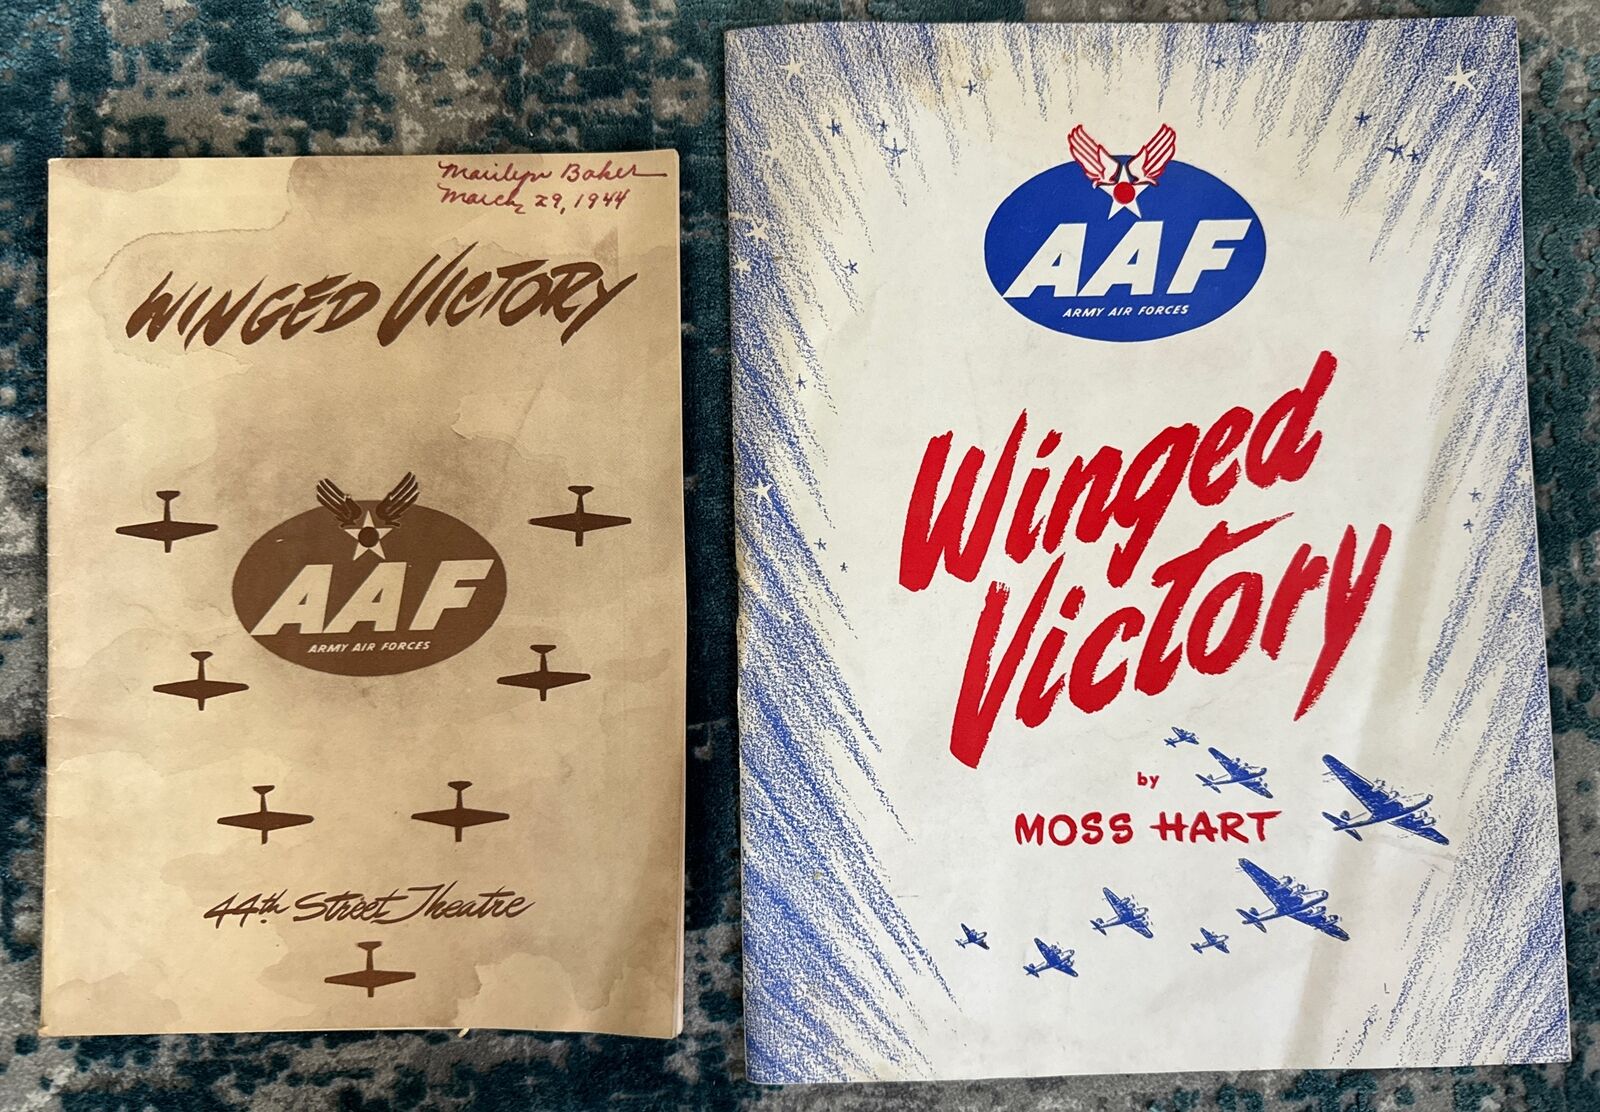 WW2 Winged Victory AAF 1944 Program Playbill 44th St Theatre Moss Hart - Pair